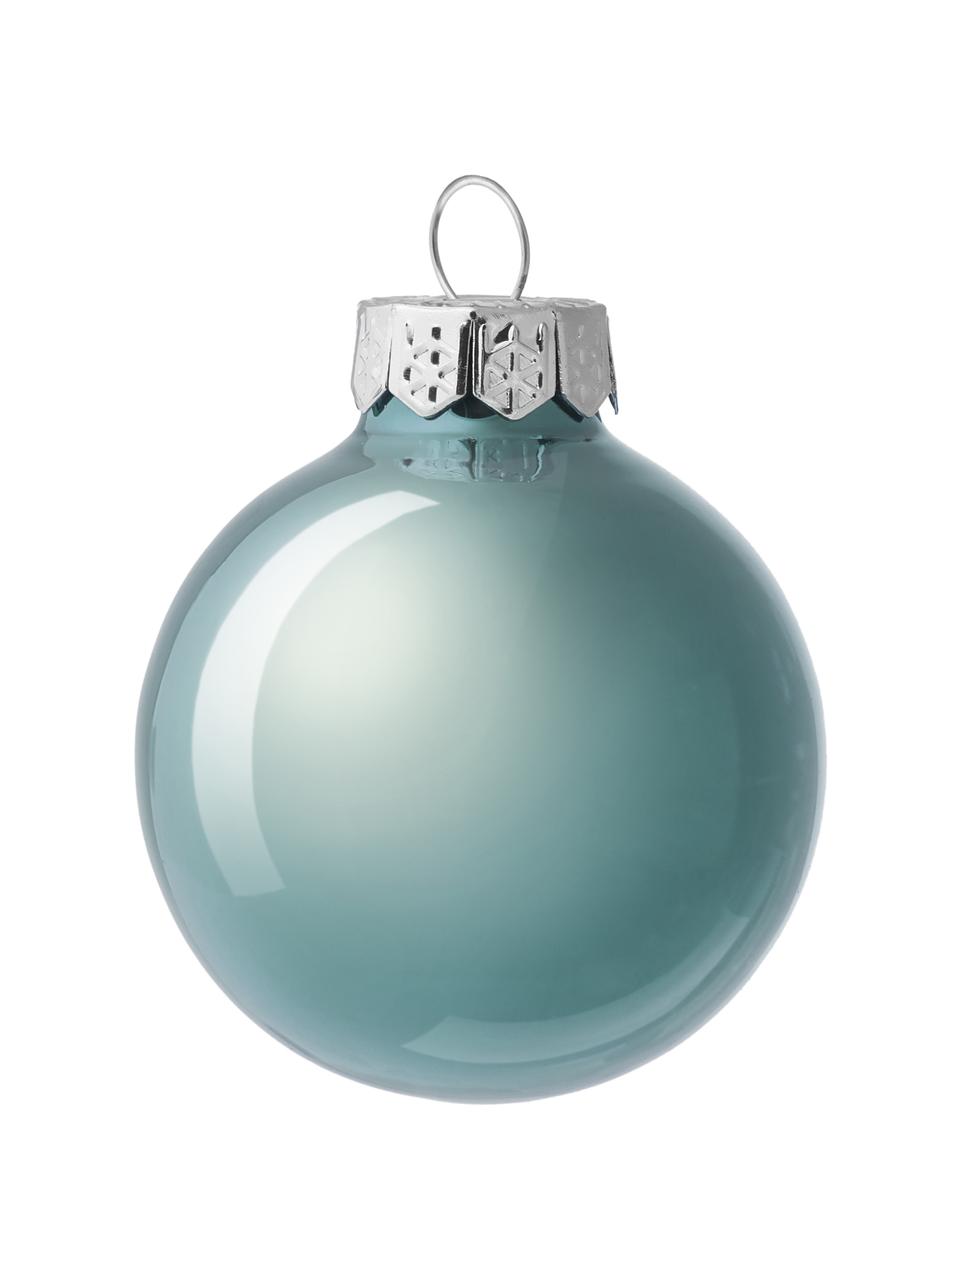 Kerstballenset Evergreen, 6 stuks, Lichtblauw, Ø 8 cm, 6 stuks